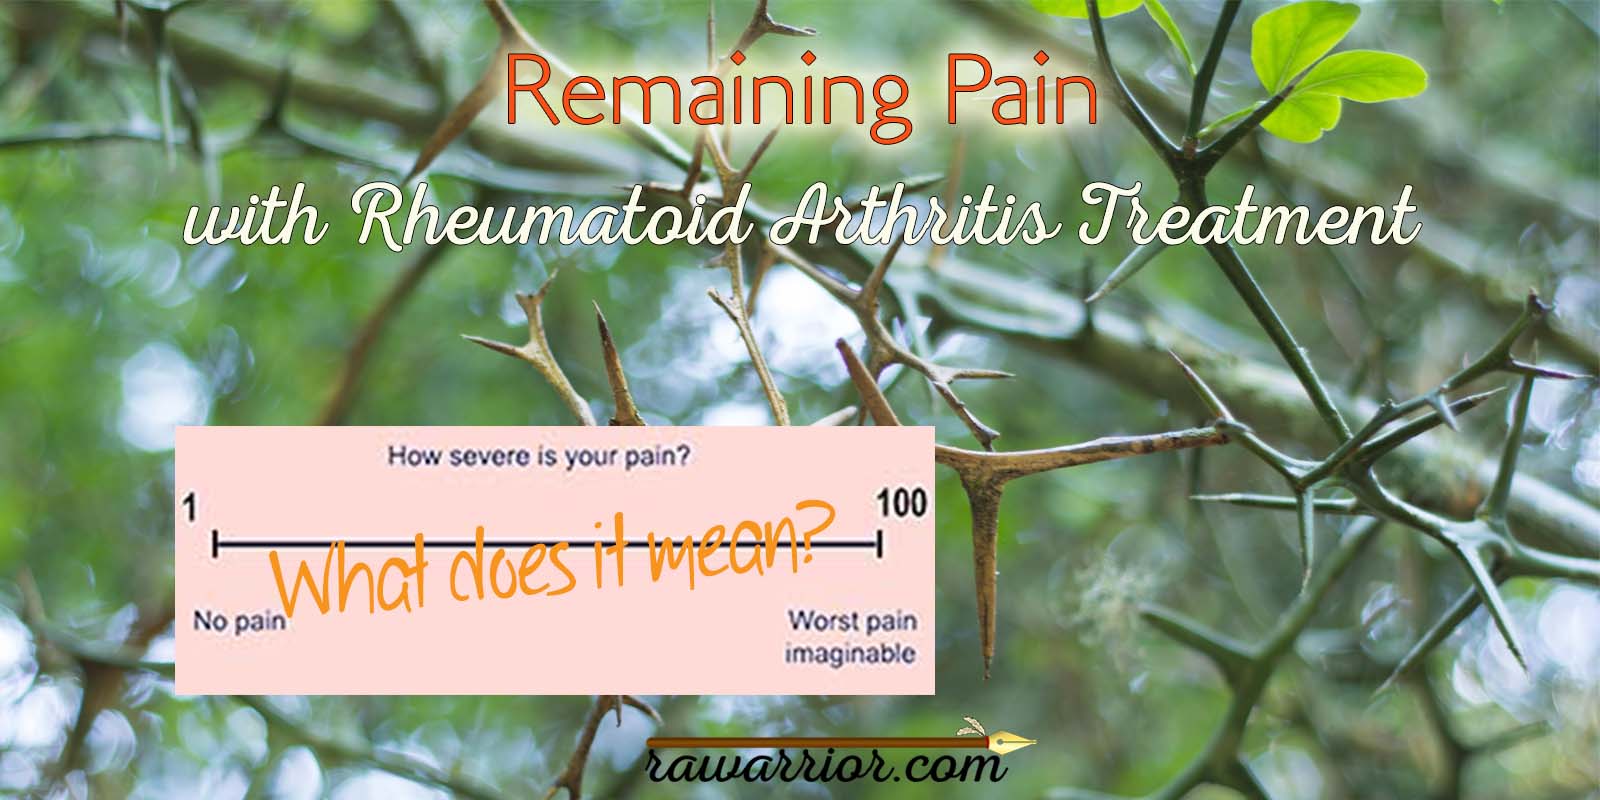 Remaining Pain with Rheumatoid Arthritis Treatment